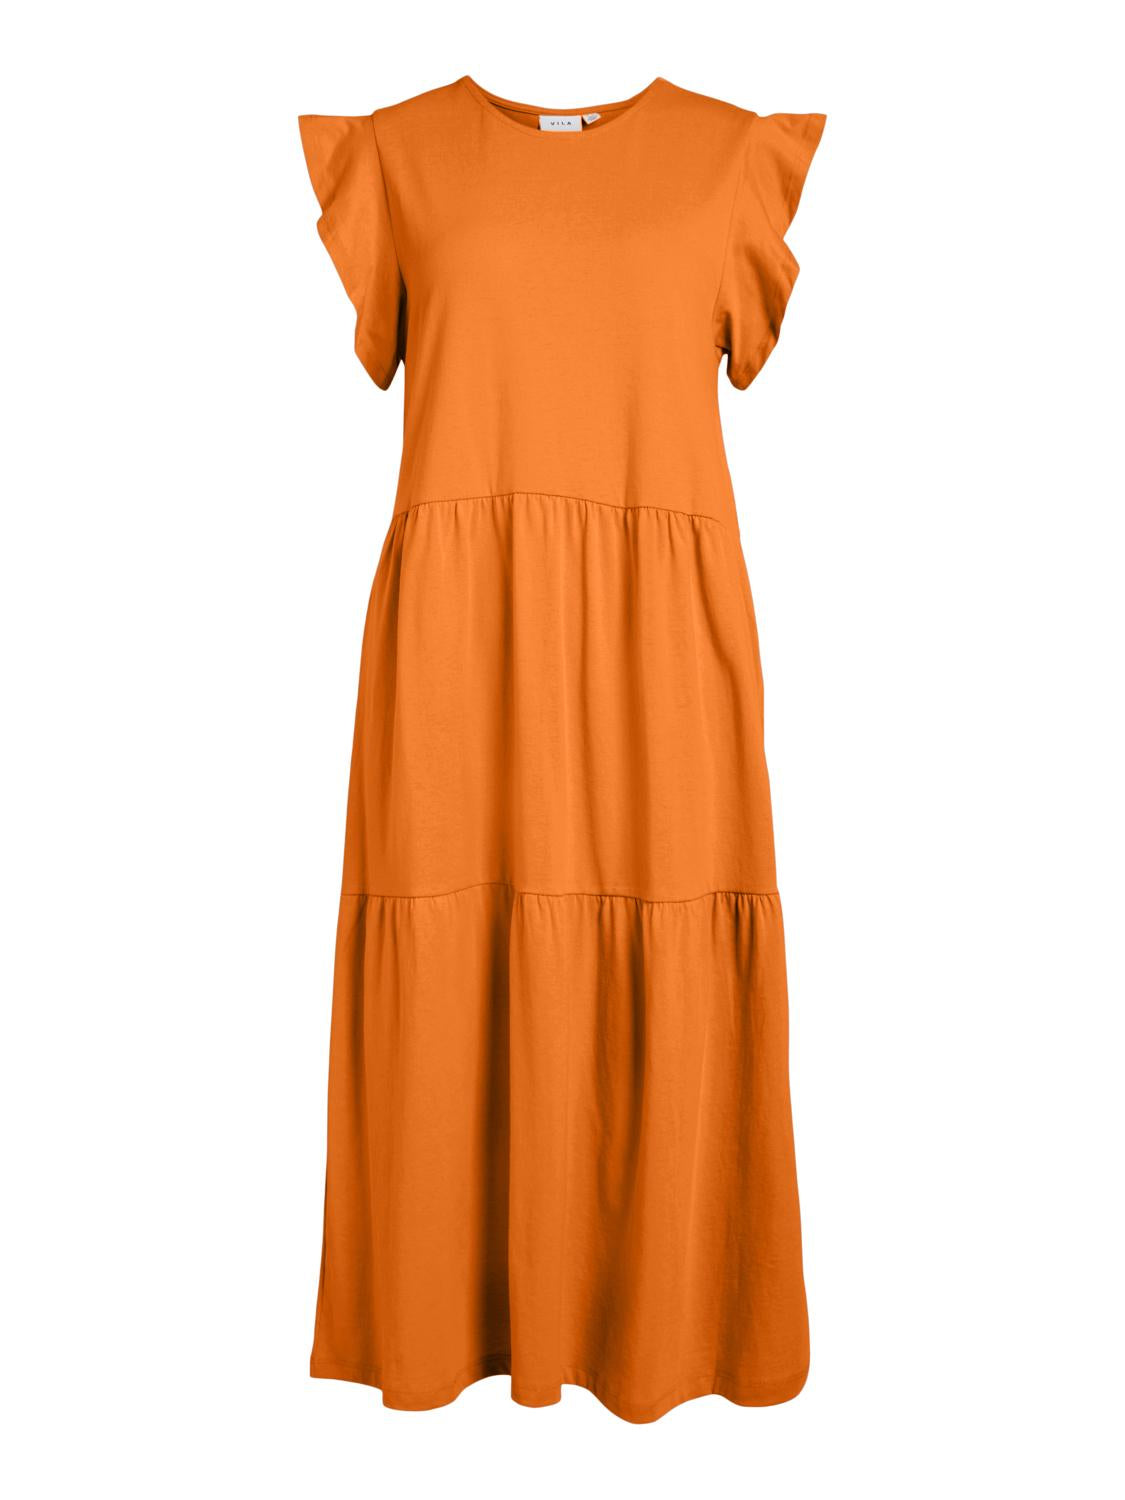 VISUMMER Dress - Sun Orange